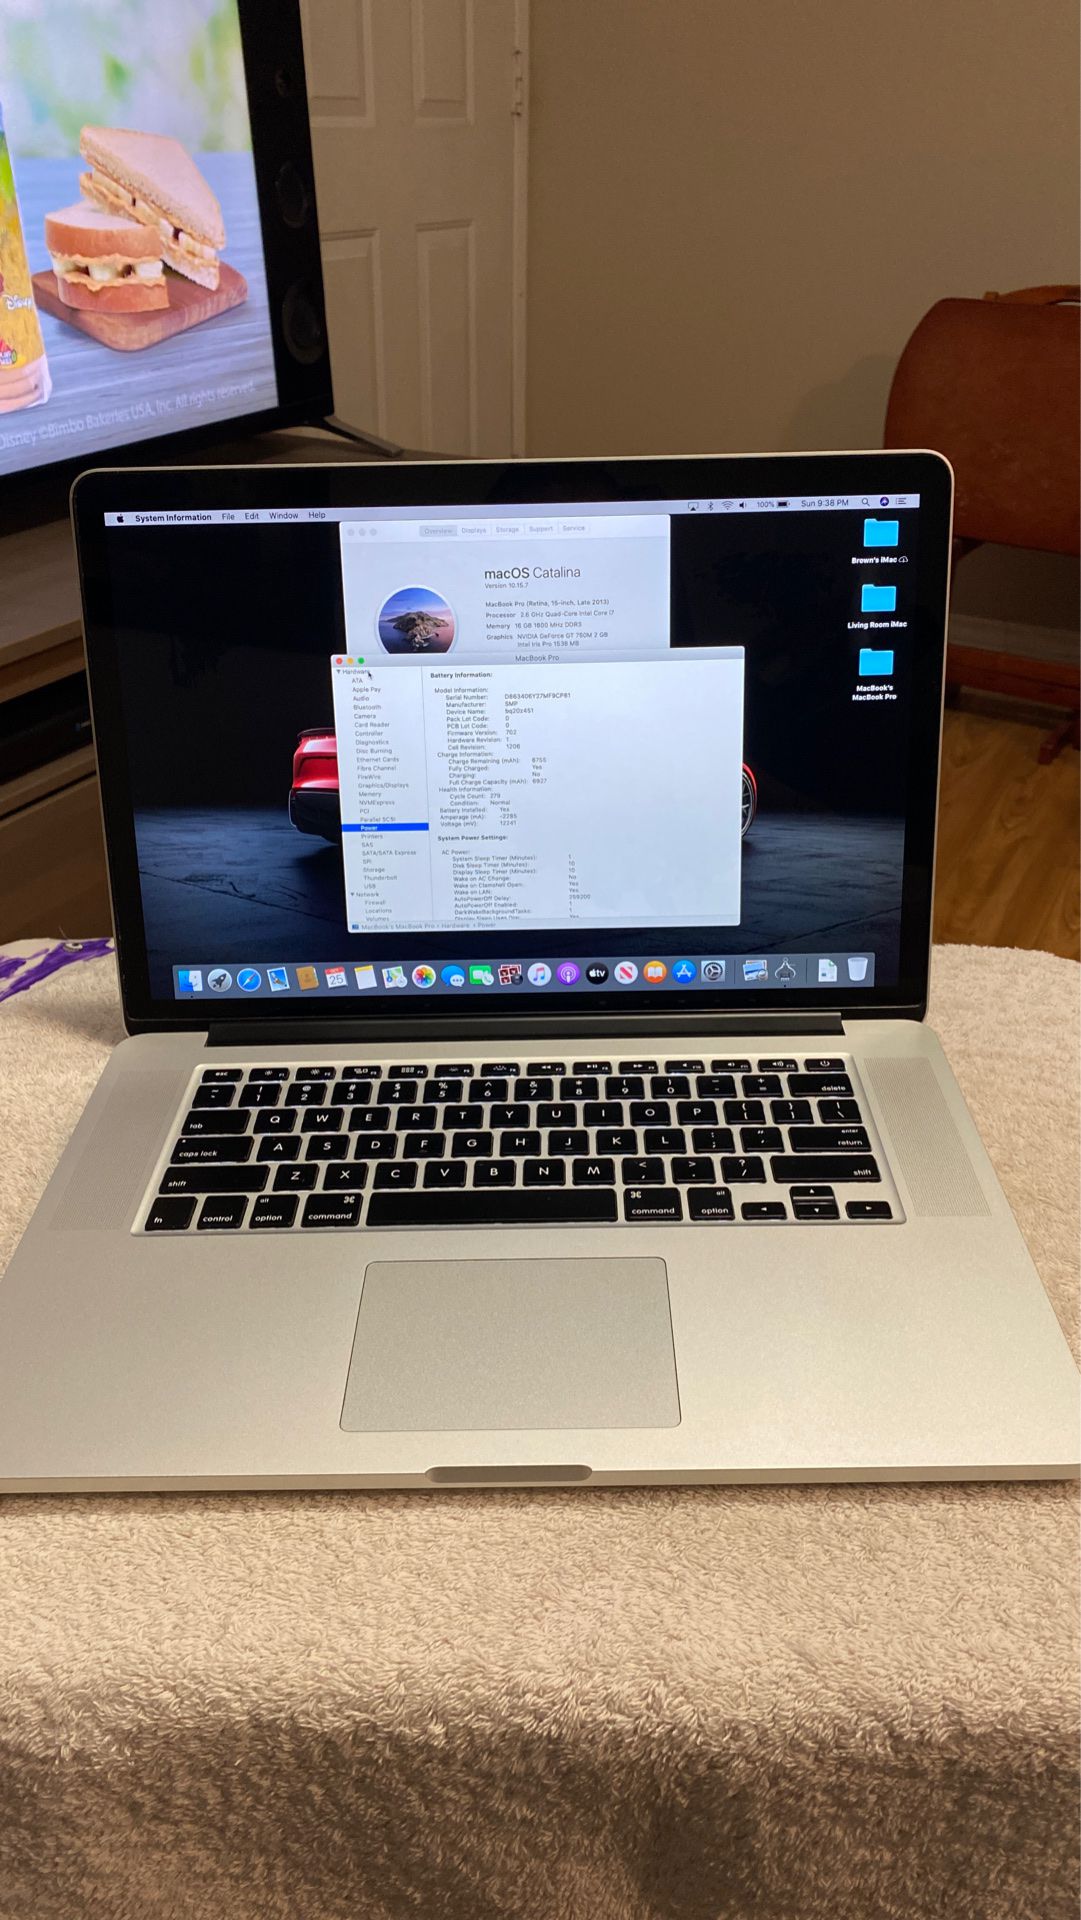 MacBook Pro (Retina, 15-inch, Late 2013), 2.6 GHz Quad Core Intel Core i7, 16 GB memory, dual graphics, 1 TB Flash Storage